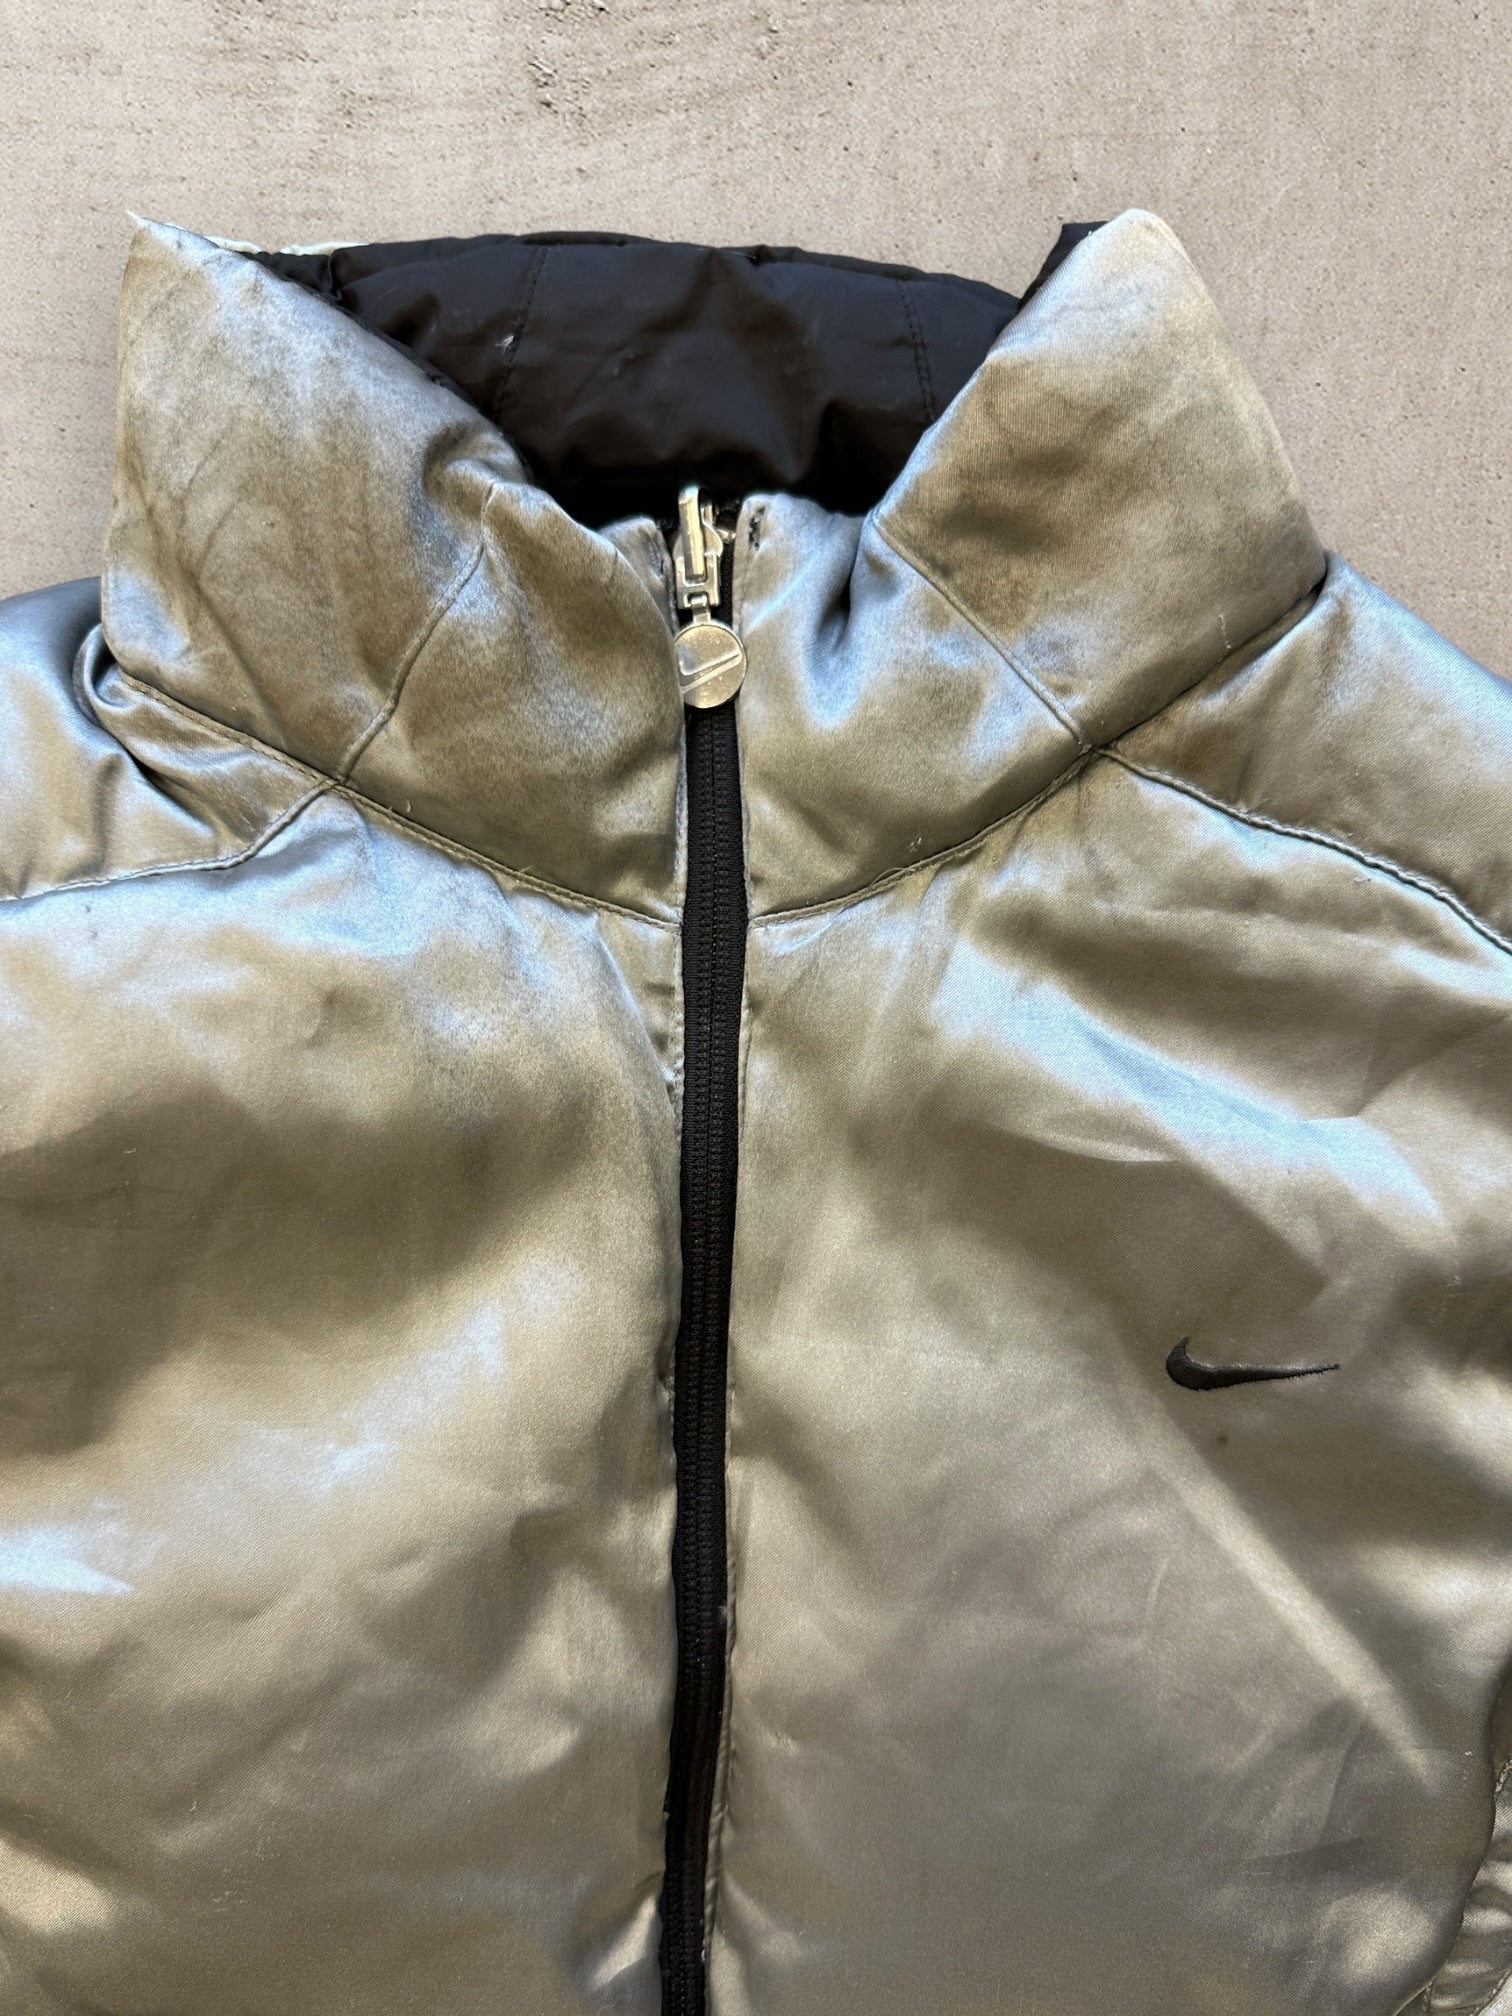 00s Nike Black Zip Up Puffer Vest - Medium